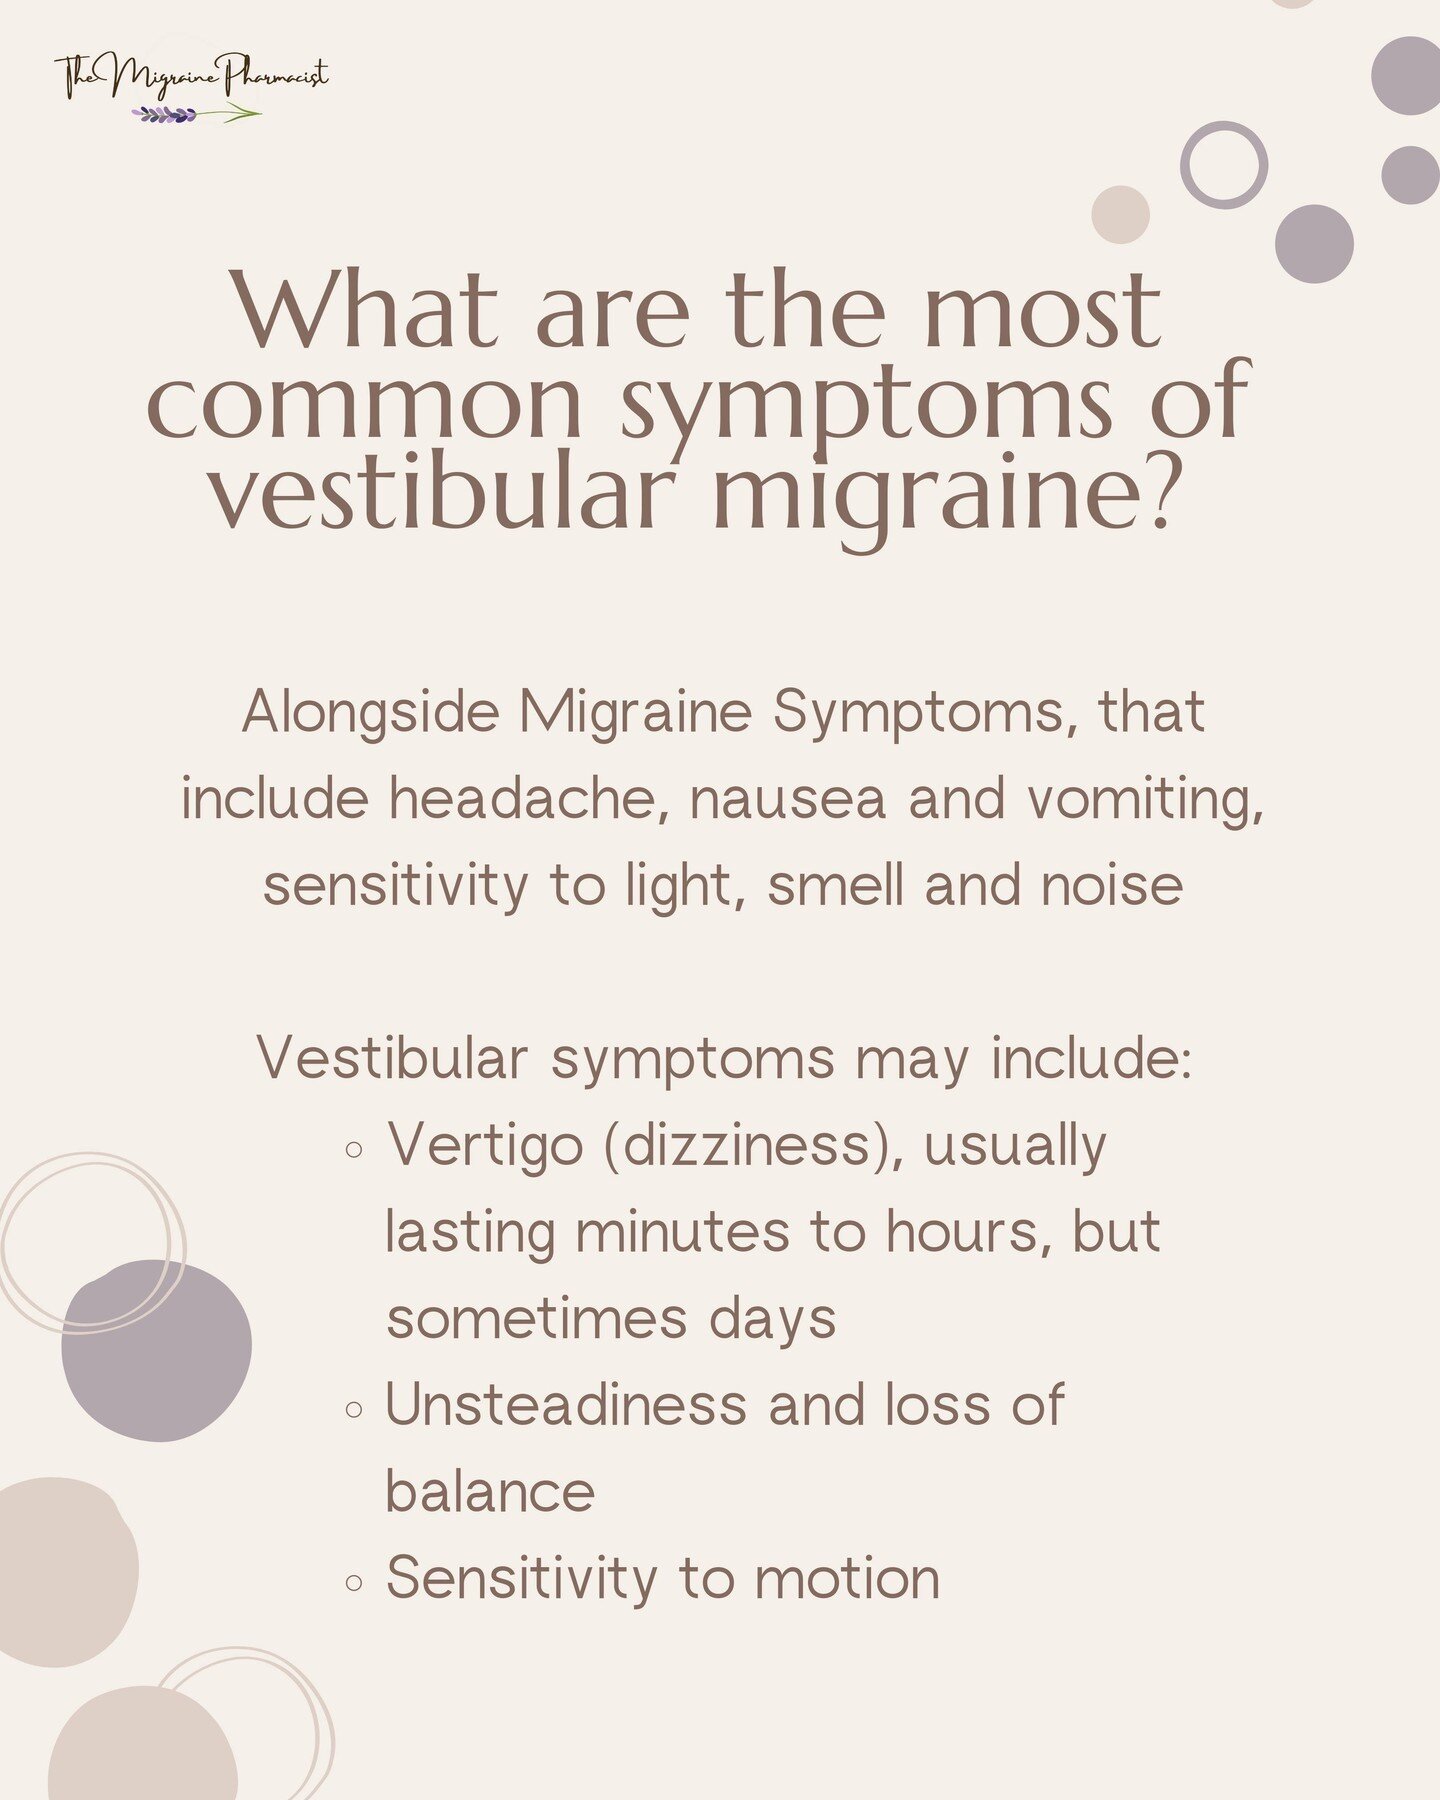 Symptoms of Vestibular Migraine

#migraine #migrain #migra&ntilde;a #headache #migren #selfcare #pain #selfcare #diary #free #healthylifestyle #vestibular #vesibularmigraine #migrain